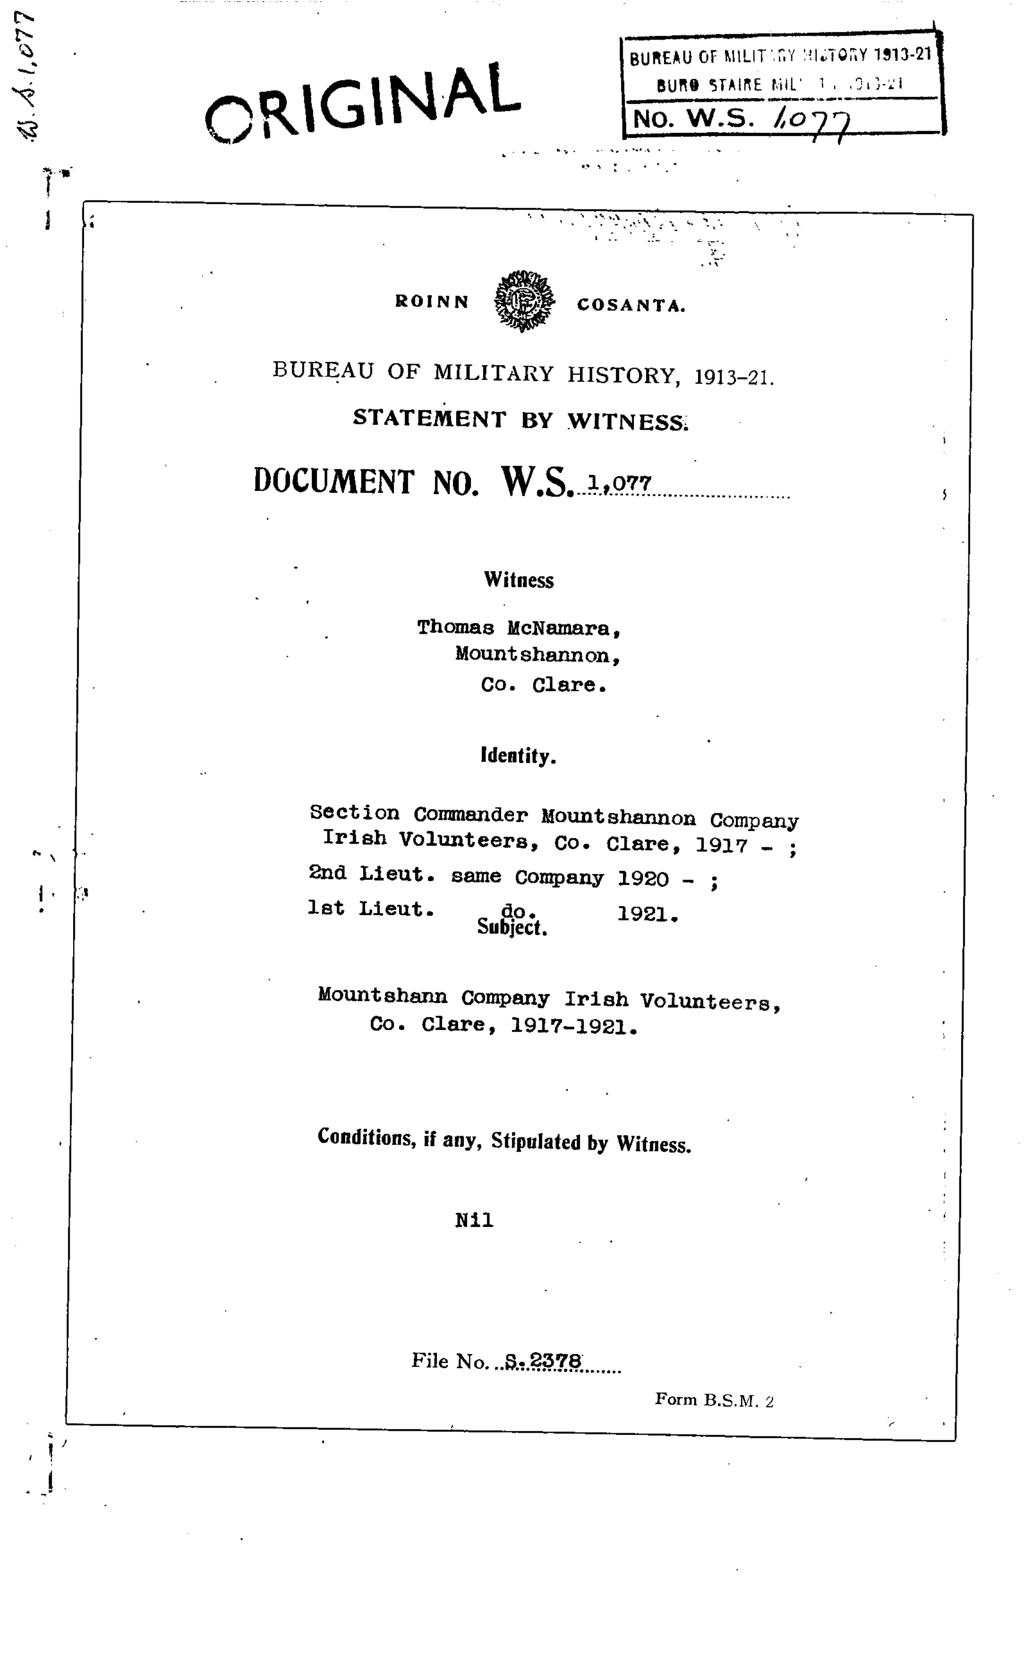 ROINN COSANTA. BUREAU OF MILITARY HISTORY, 1913-21. STATEMENT BY WITNESS. DOCUMENT NO. W.S. 1,077 Witness Thomas McNamara, Mountshannon, Co. Clare. Identity.